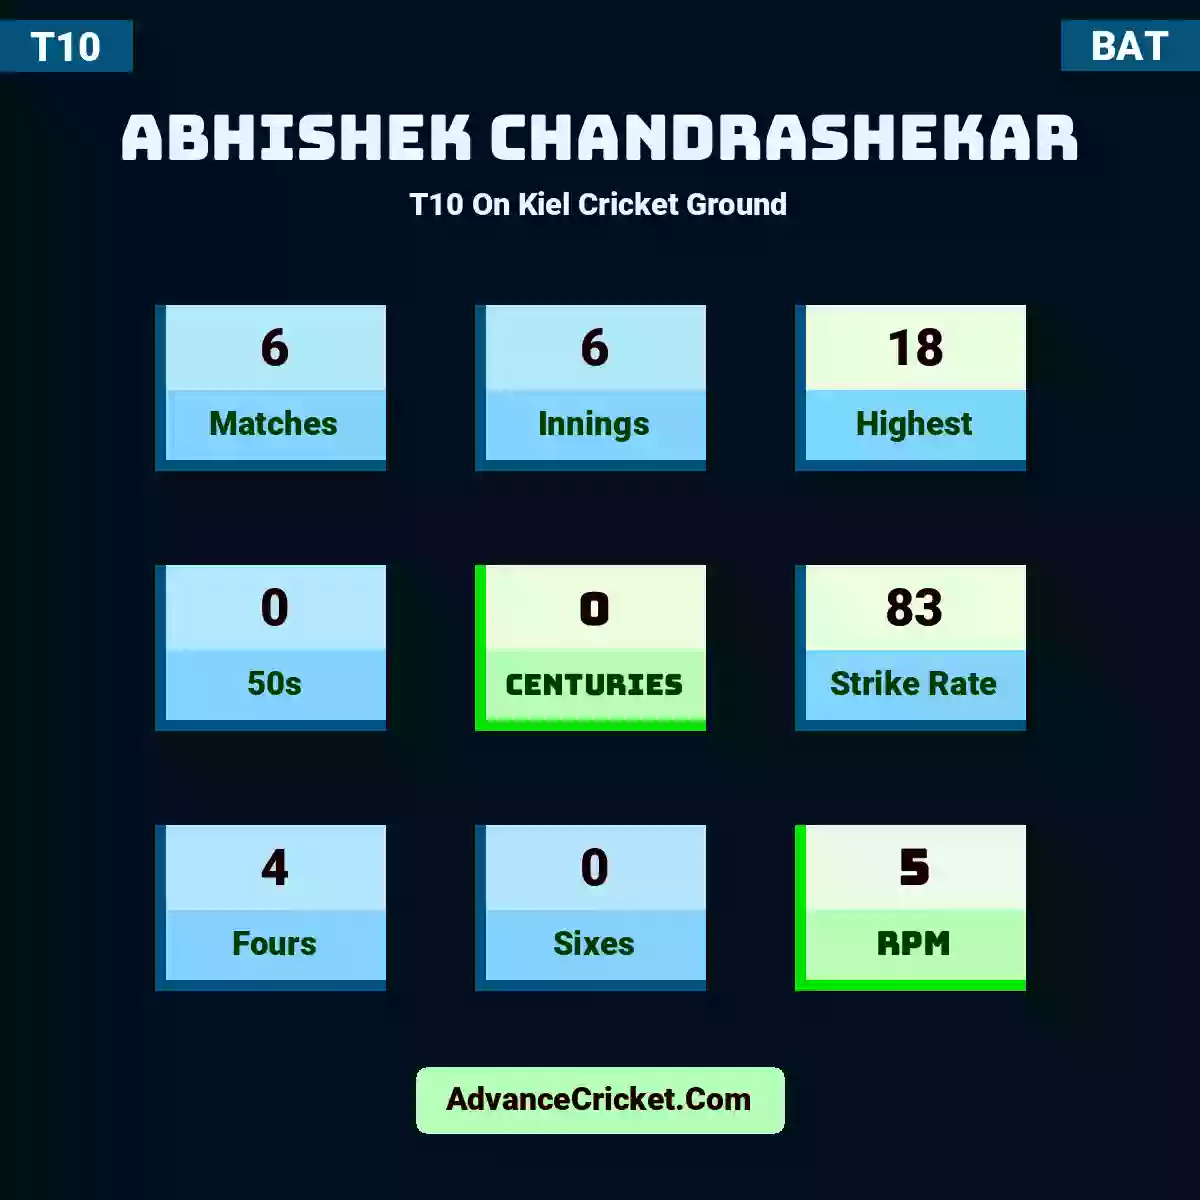 Abhishek Chandrashekar T10  On Kiel Cricket Ground, Abhishek Chandrashekar played 6 matches, scored 18 runs as highest, 0 half-centuries, and 0 centuries, with a strike rate of 83. A.Chandrashekar hit 4 fours and 0 sixes, with an RPM of 5.